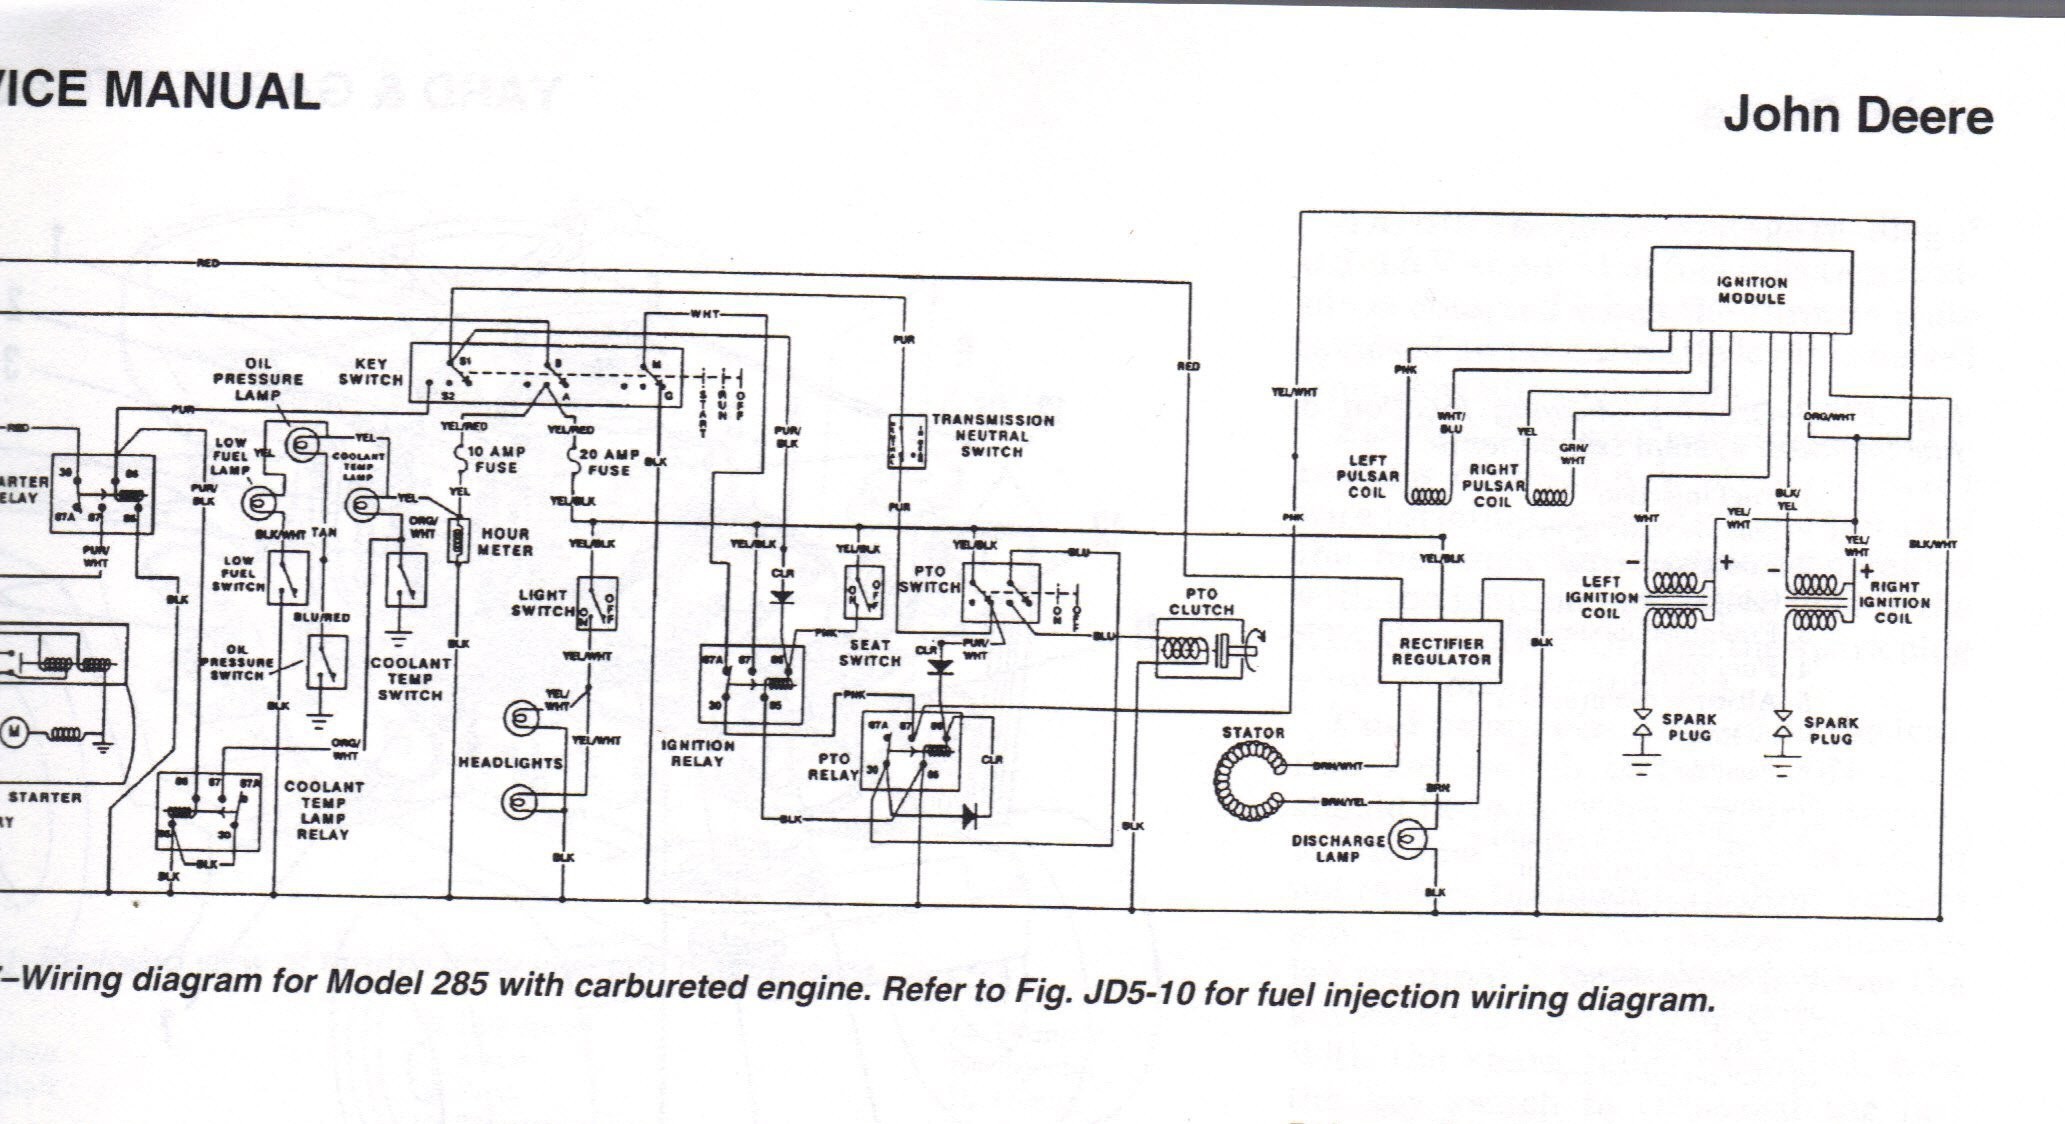 John Deere D140 Wiring Diagram John Deere D140 Wiring Diagram Eyelash Of John Deere D140 Wiring Diagram